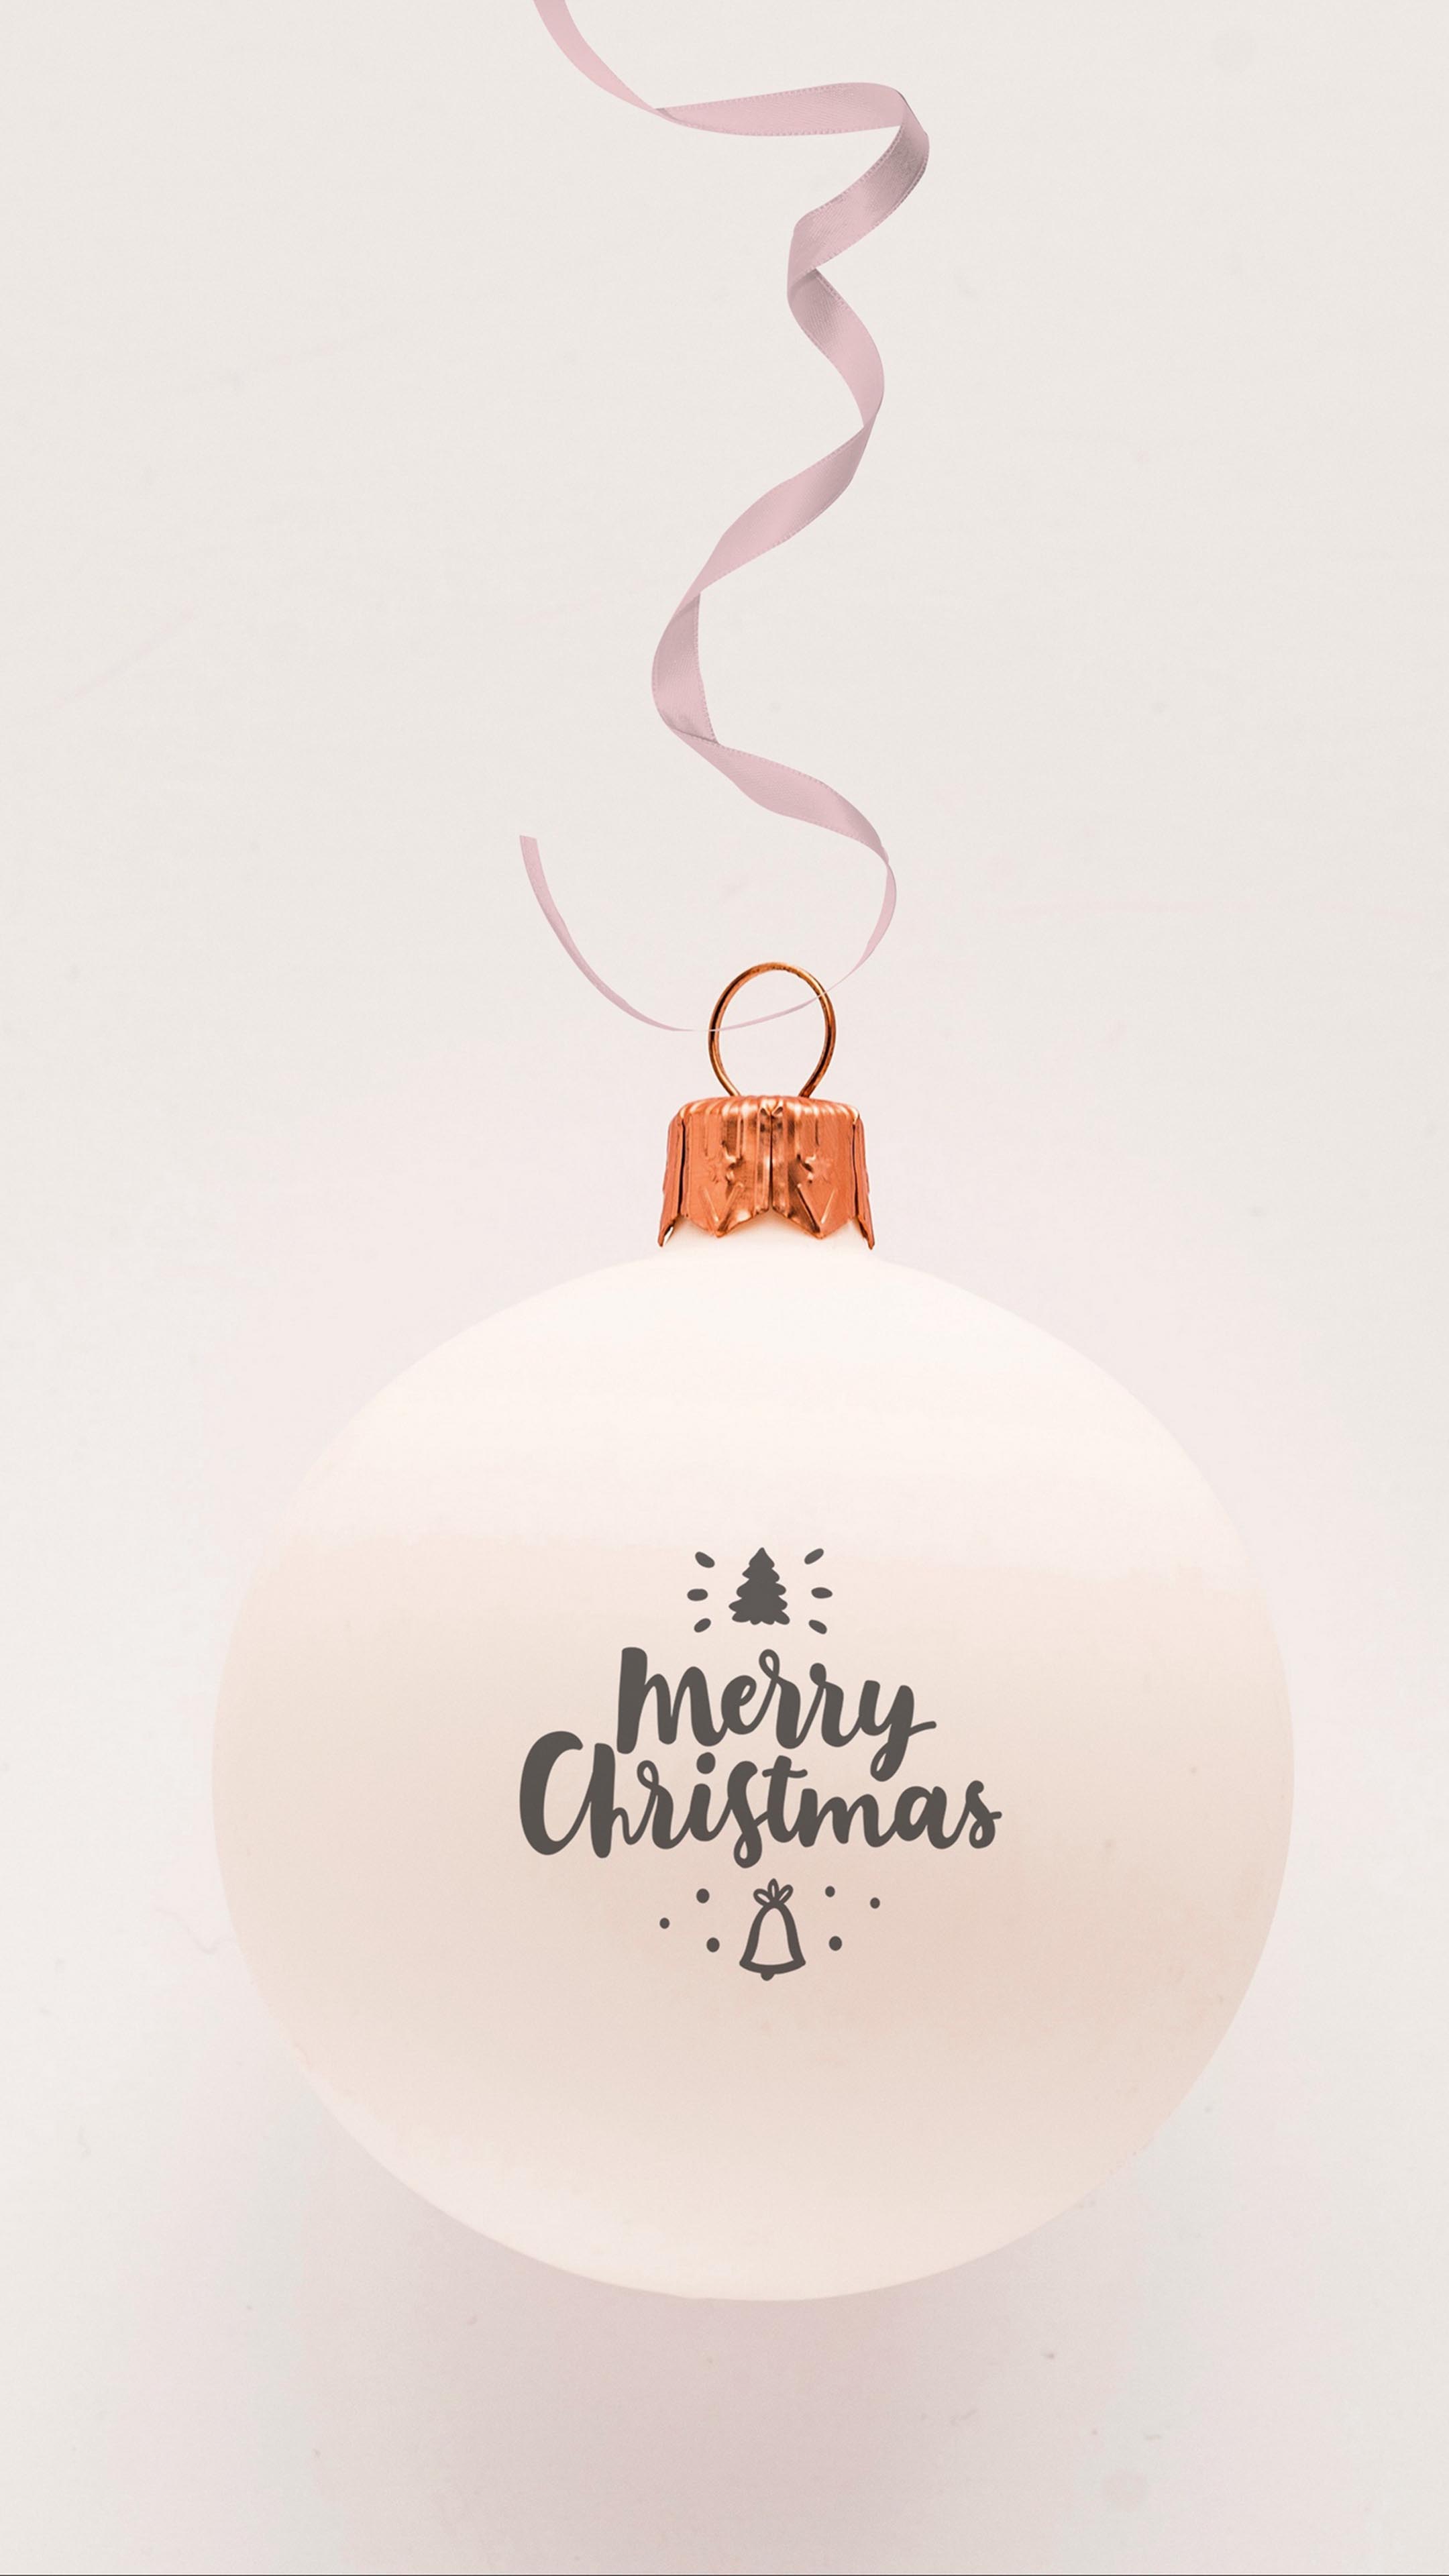 Merry Christmas Ball Ornament White Background 4K Ultra HD Mobile Wallpaper